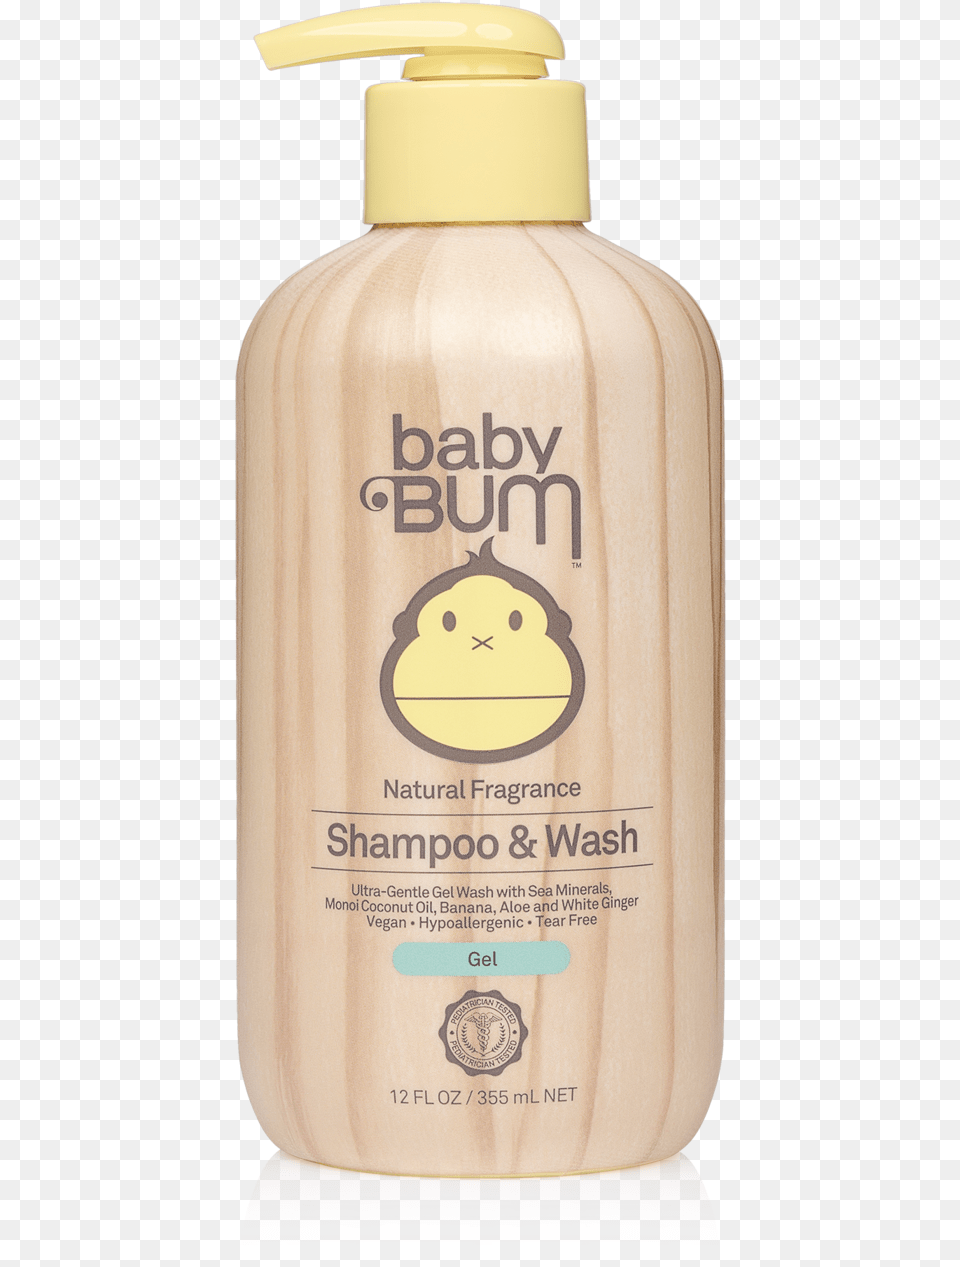 Baby Bum Shampoo And Wash, Bottle, Lotion, Animal, Bird Png Image